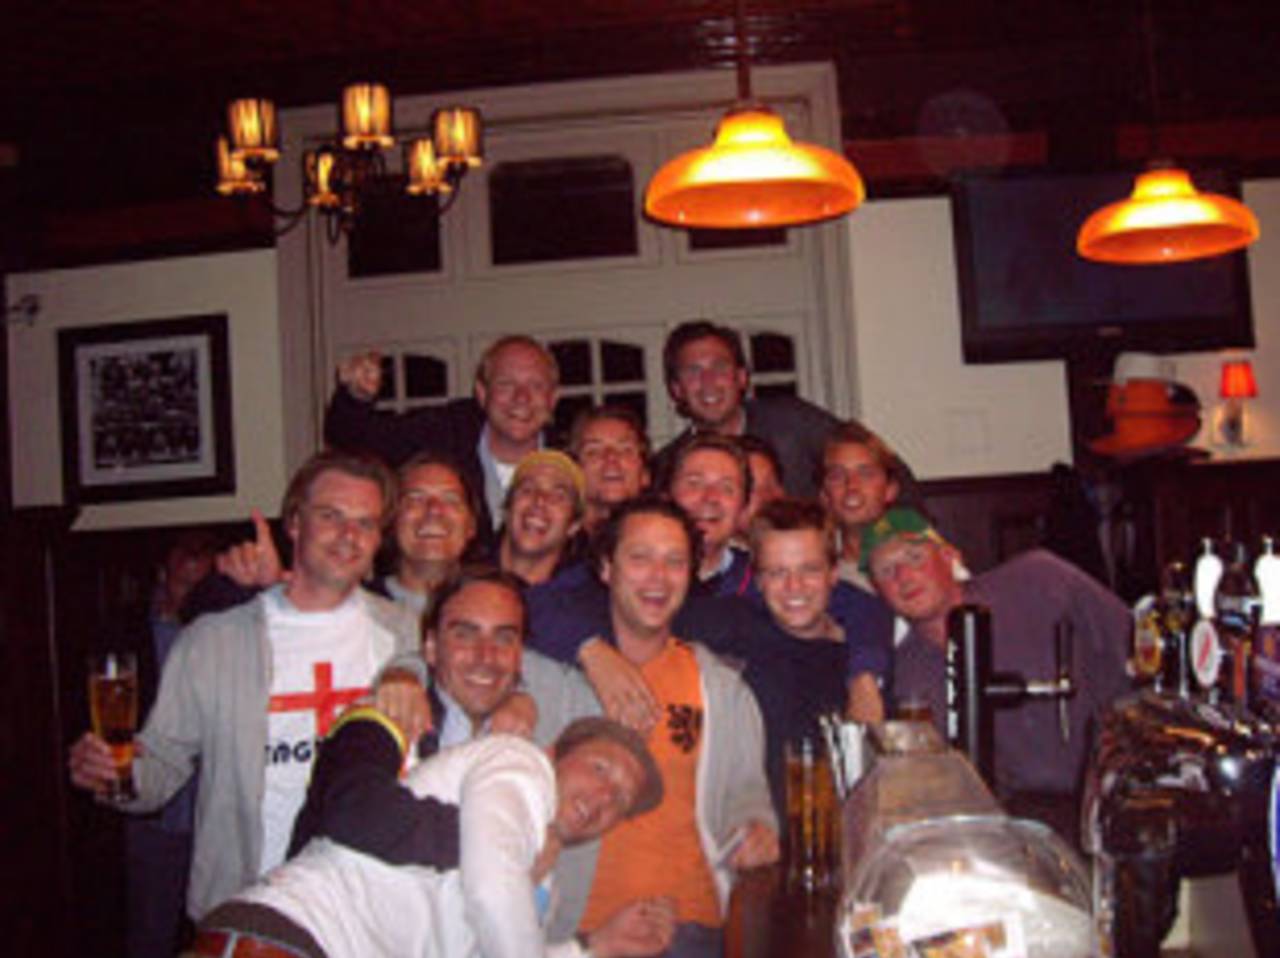 The Orange supporters celebrate Netherlands' win, England v Netherlands, ICC World Twenty20, Group B, Lord's, June 5, 2009